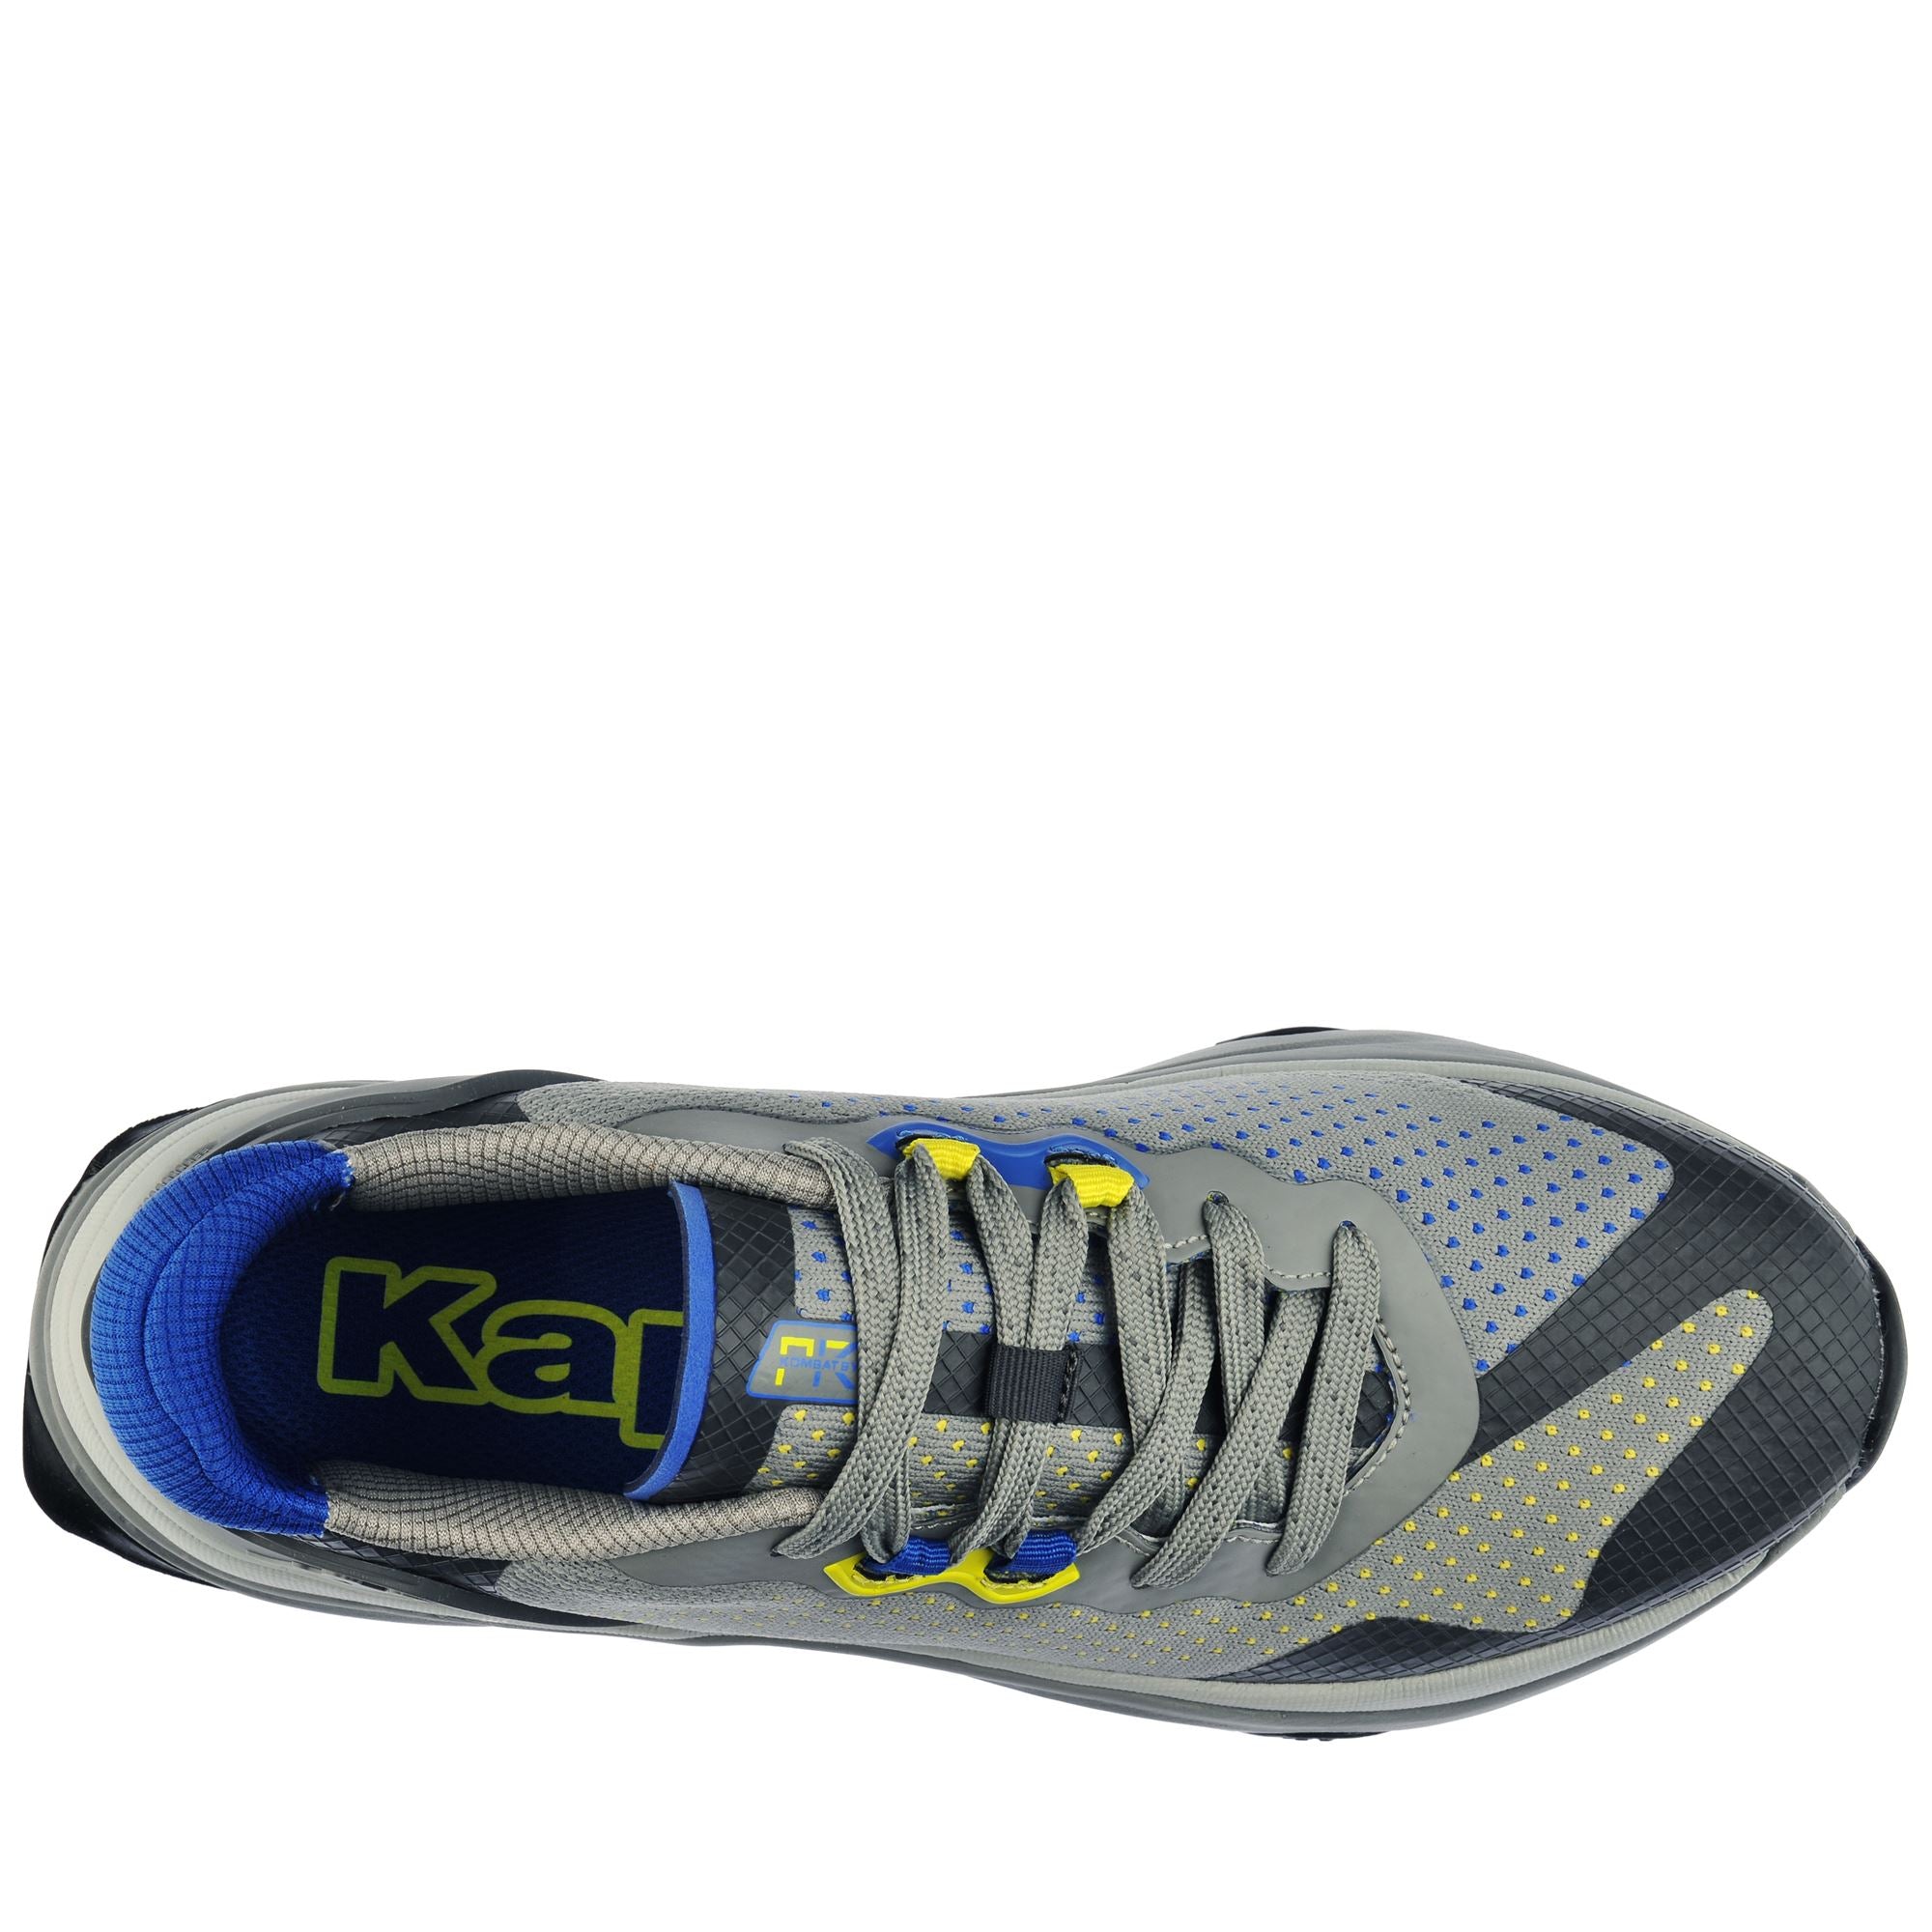 KOMBAT PERFORMANCE 2 PRO - Sport Shoes - Low Cut - Unisex - GREY MD-GREY  GATE-BLUE LAPIS